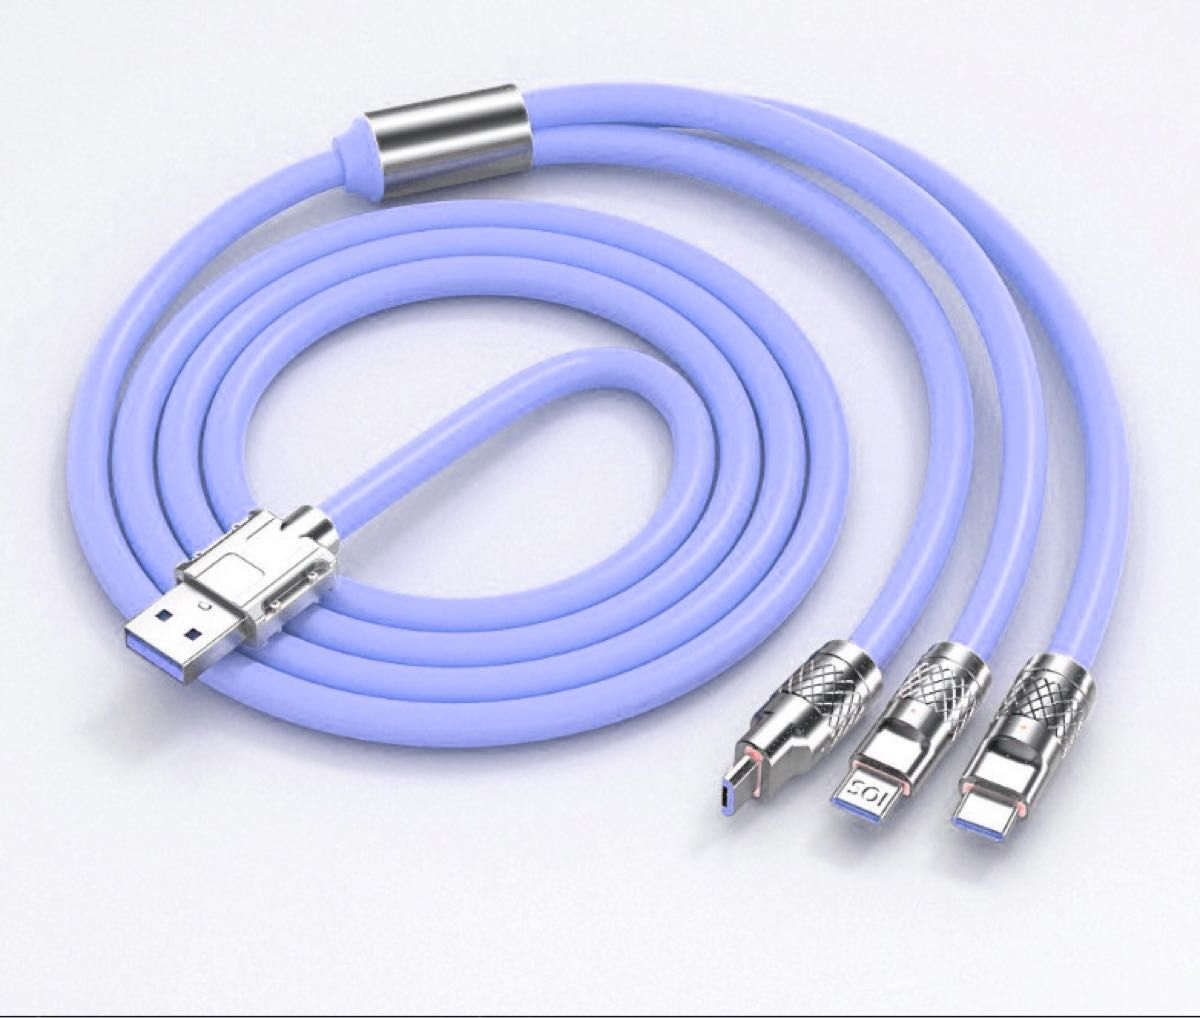 3in1 充電ケーブル USB ケーブル  急速充電 USB 充電コード 耐久性 3台同時給電可能 等全機種対応 1.2m 紫色